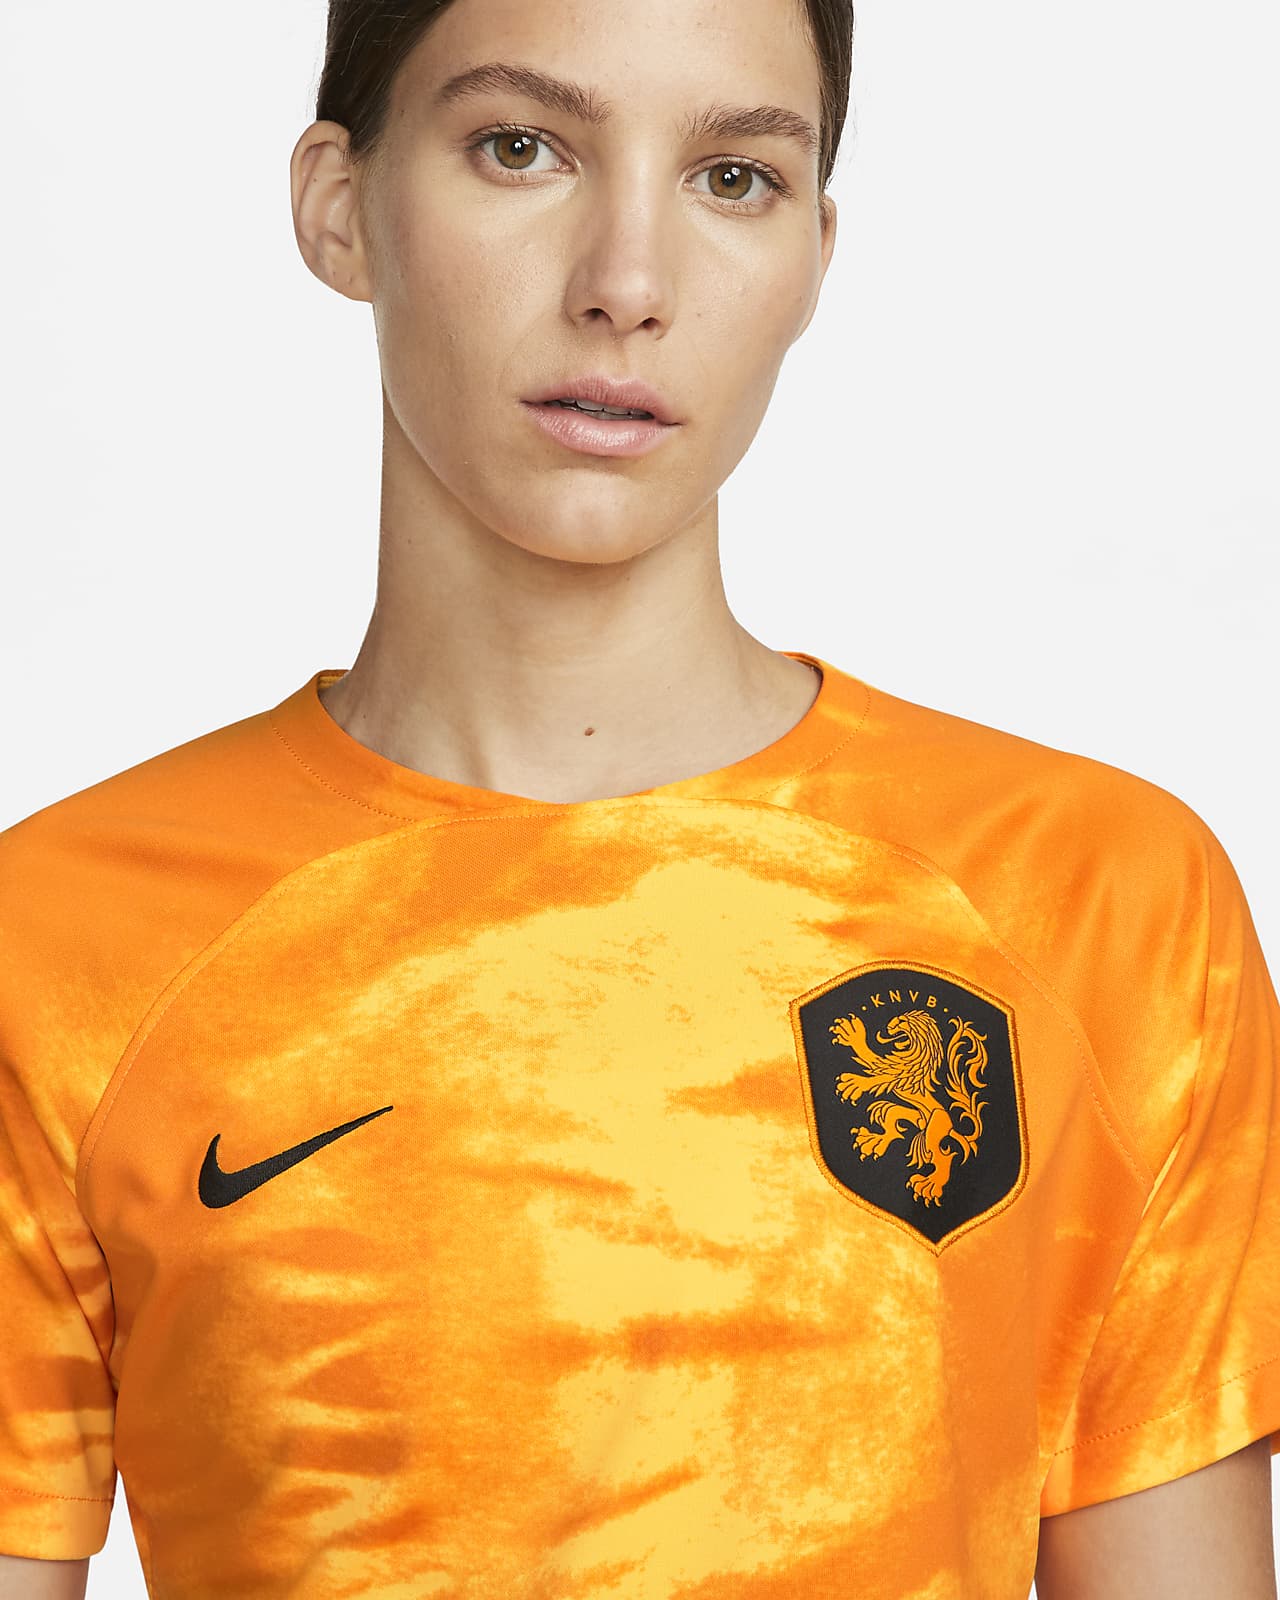 Netherlands Men's Nike Dri-FIT Pre-Match Soccer Top